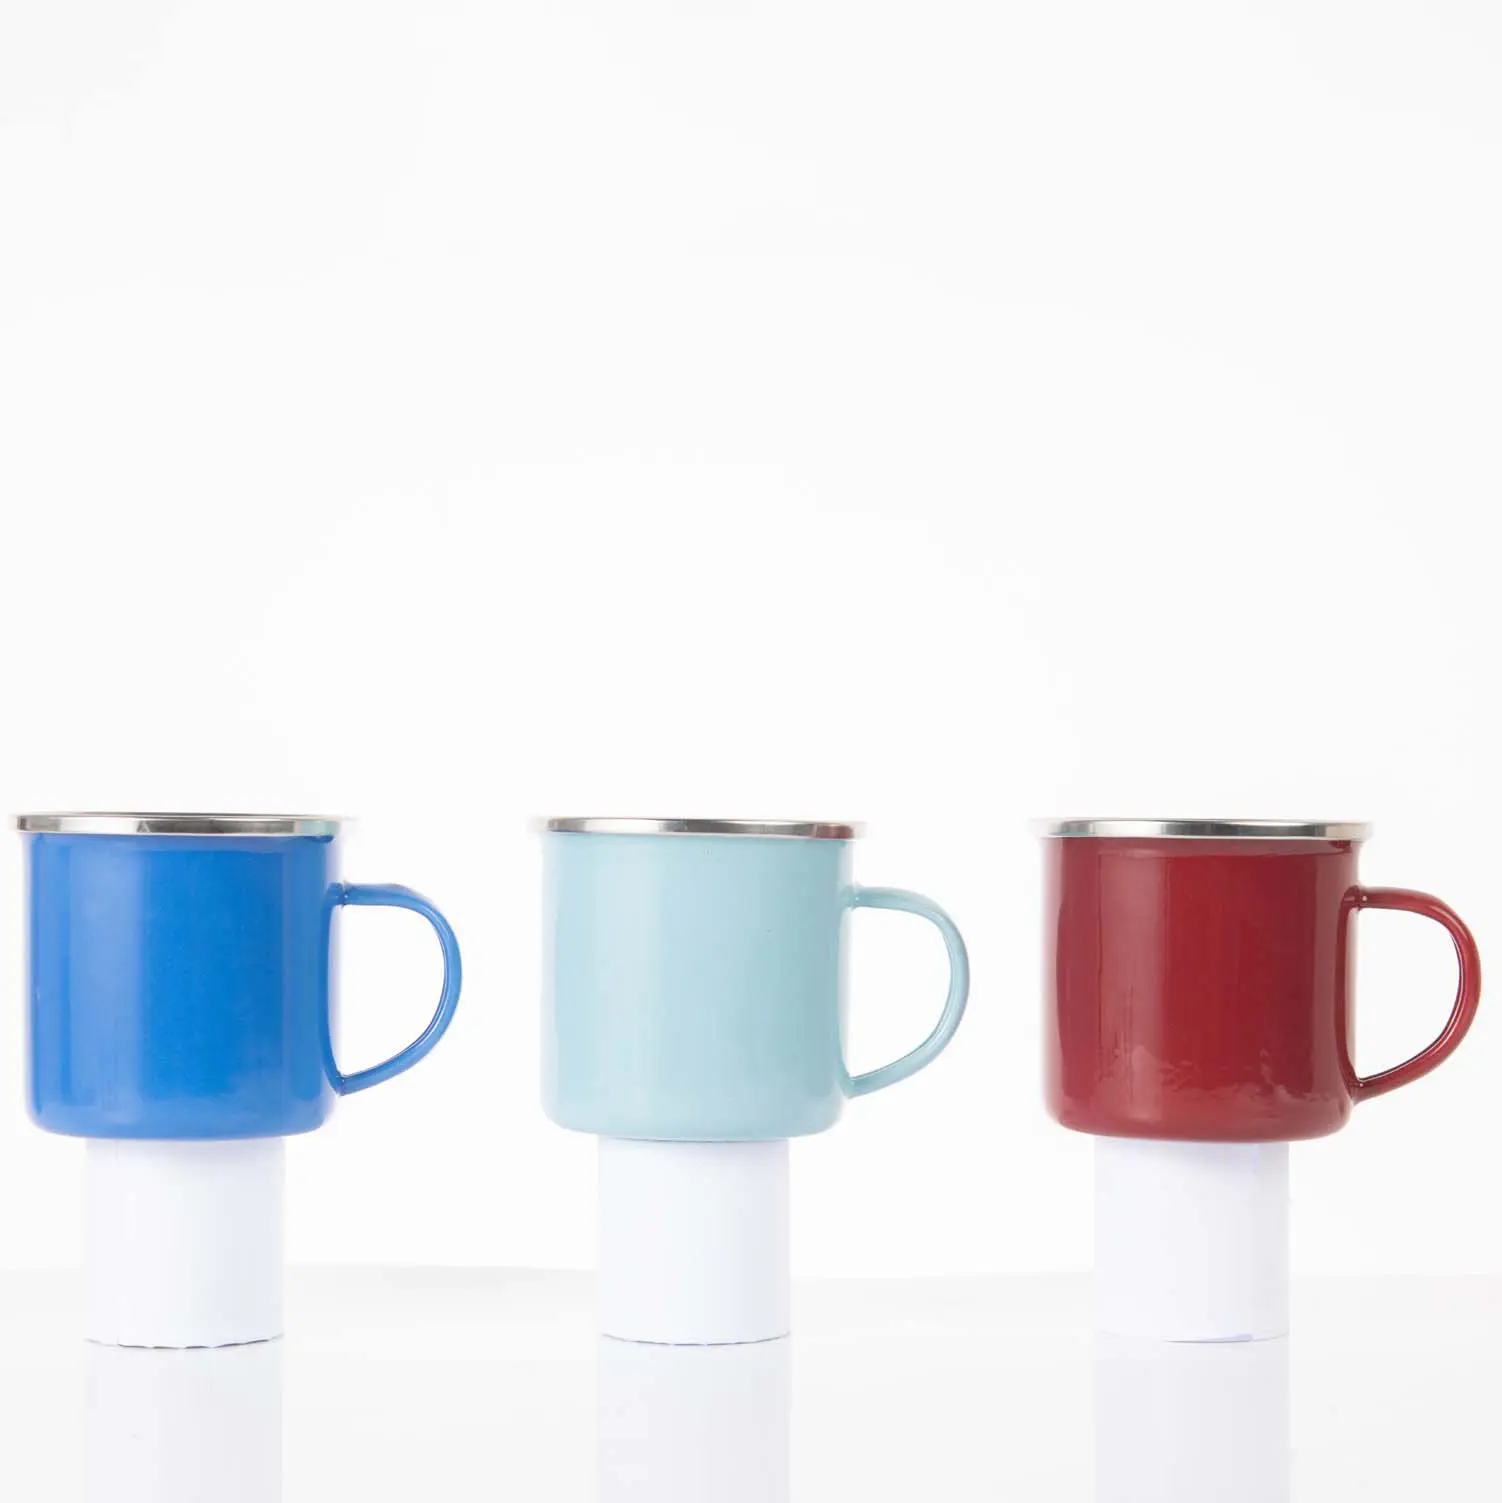 China factory wholesale enamel mugs, white enamel mugs, enamel plates and mug enamel cups